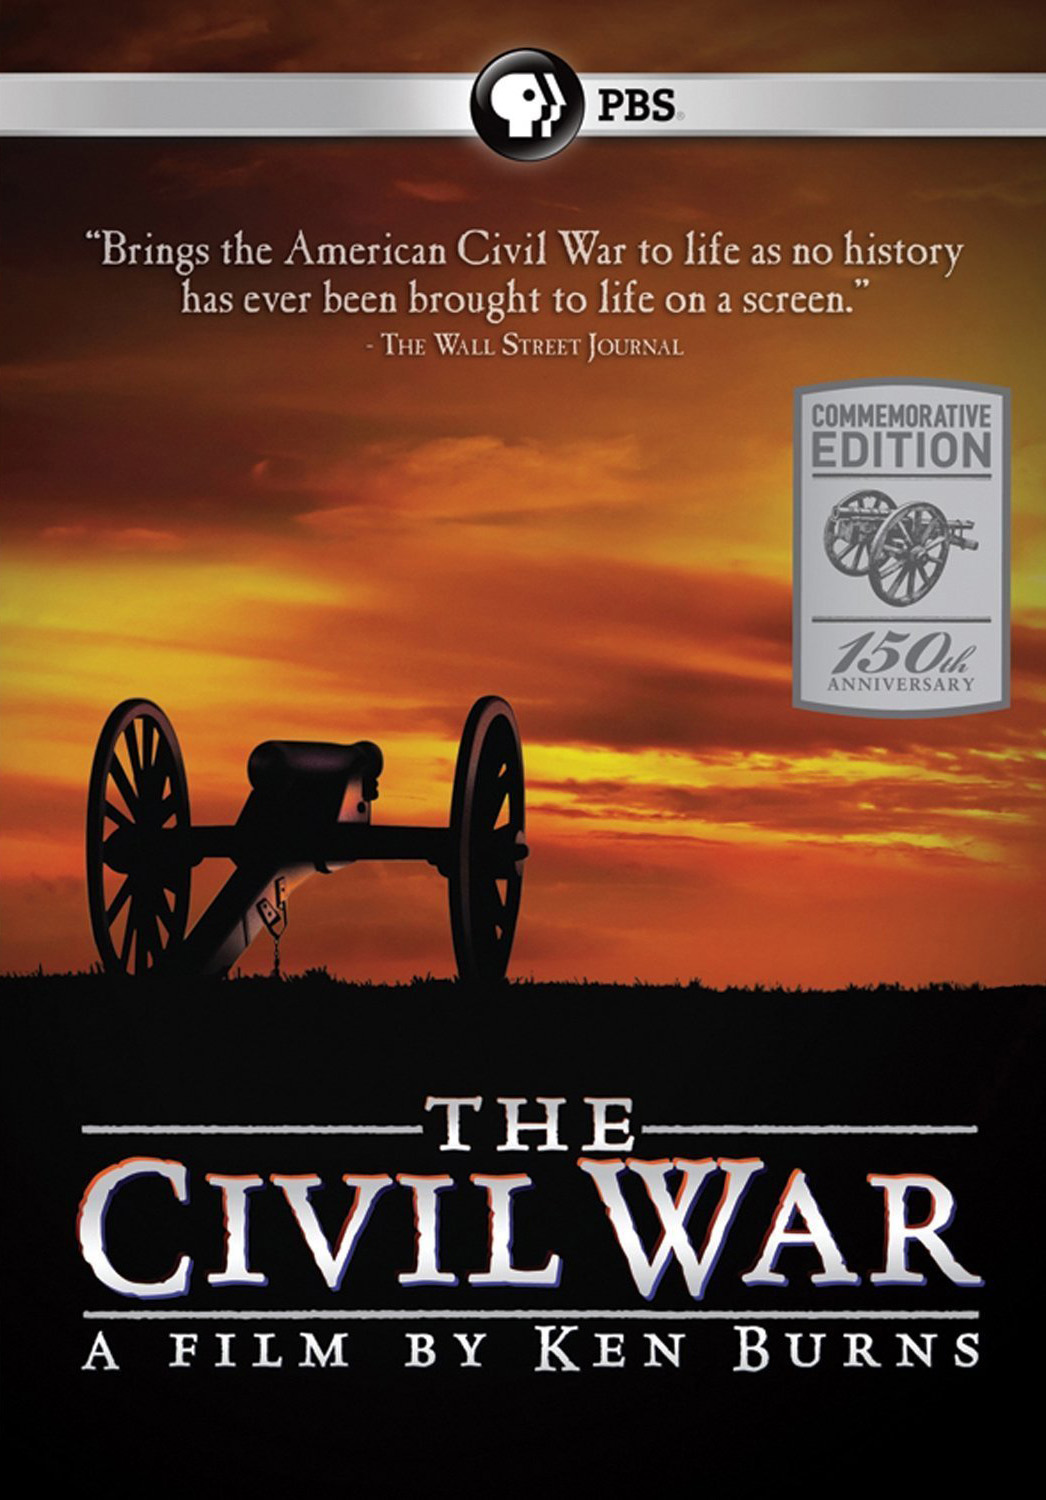 [美国内战].The.Civil.War.EP04-05.1990.BluRay.1080p.AVC.DTS-HD.MA.5.1-TTG    39.62G-2.jpg